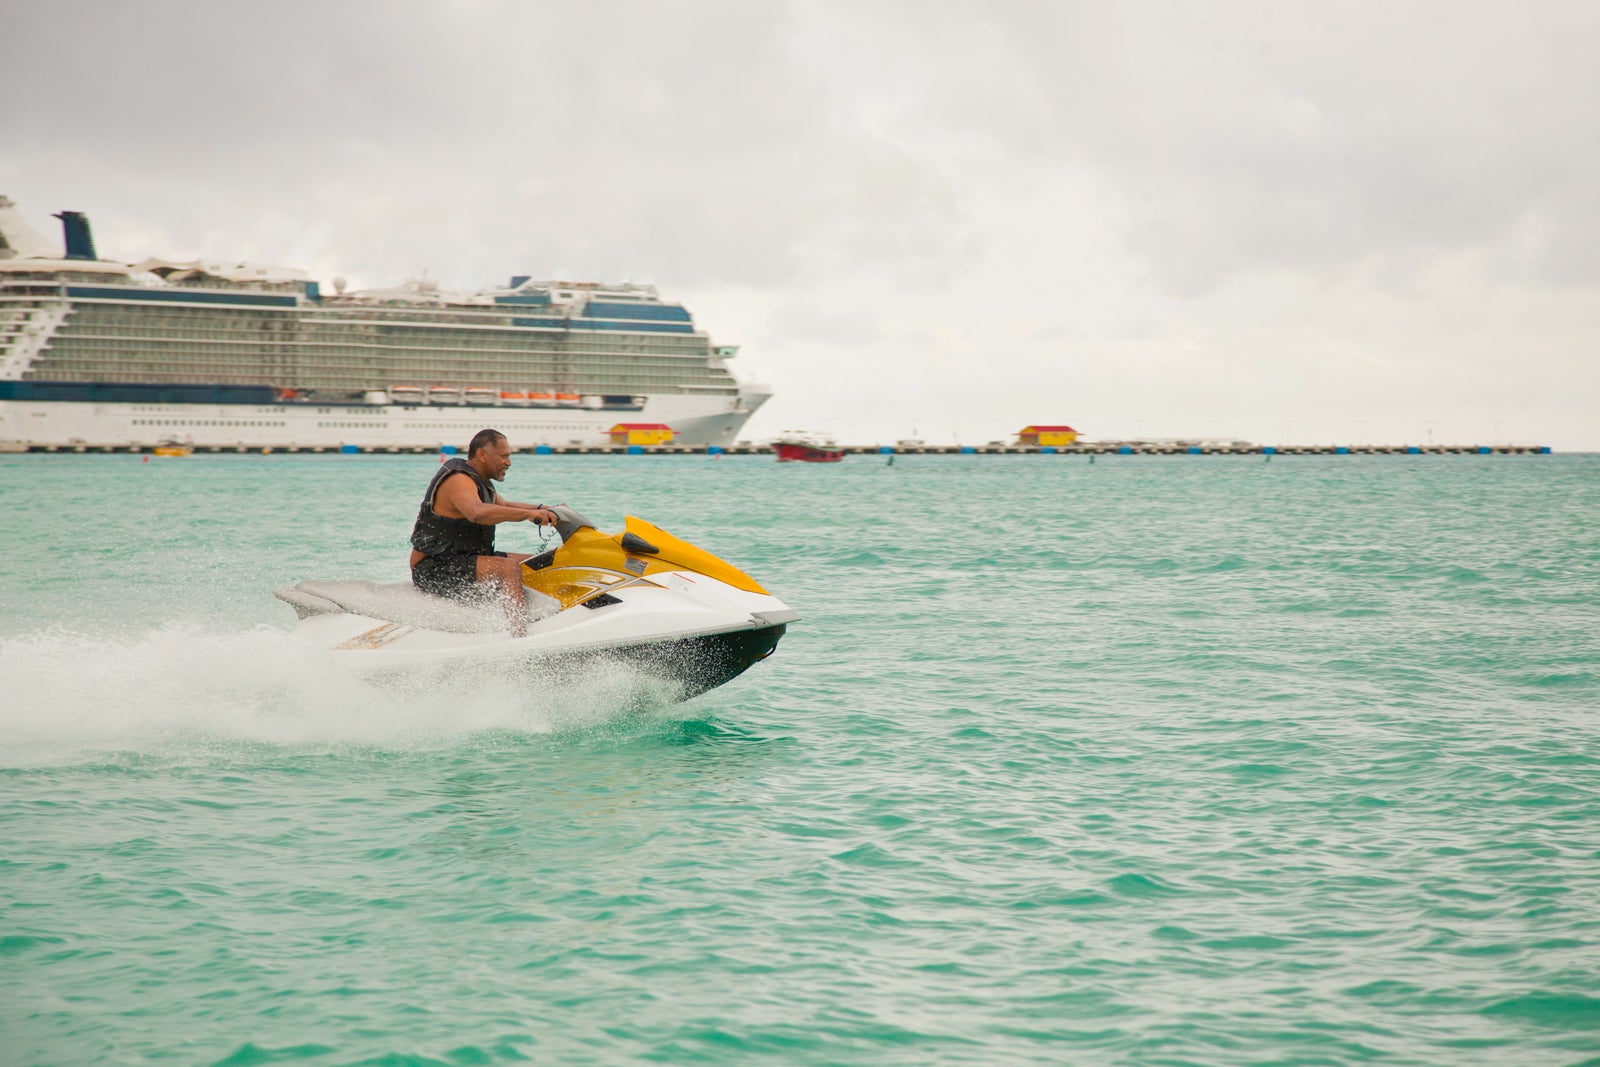 Man riding jet ski in front of cruise ship